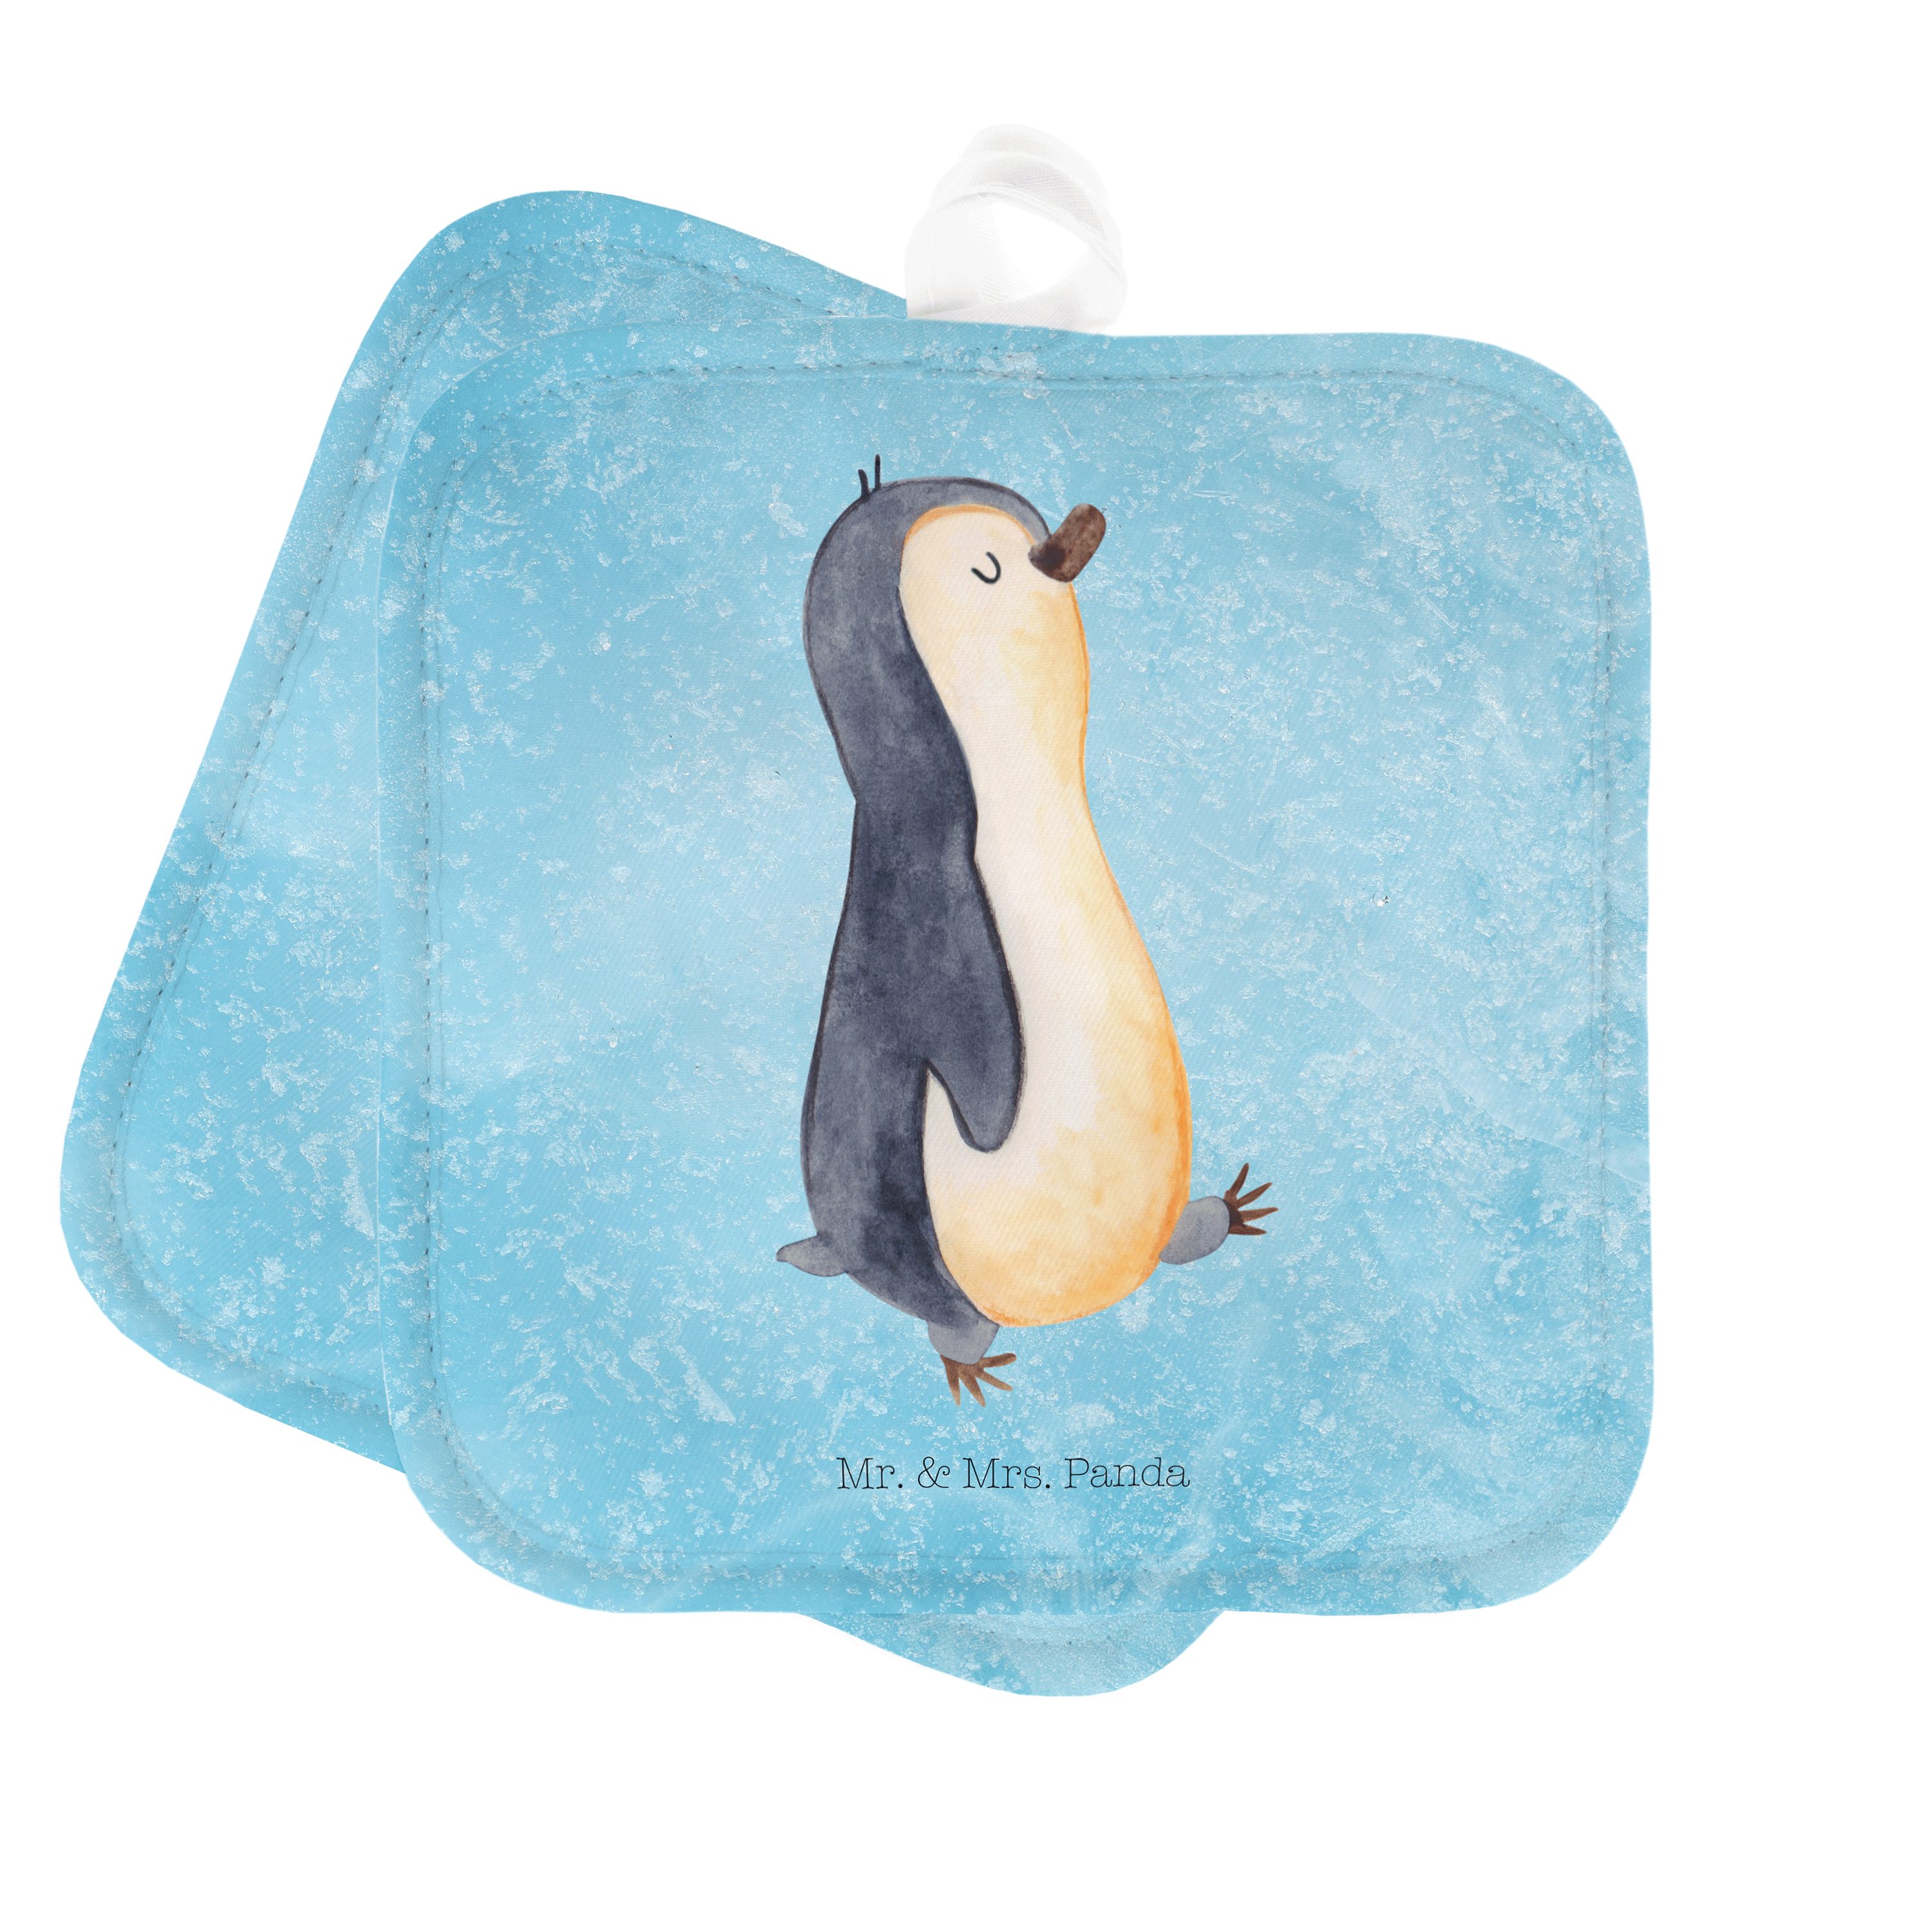 Pinguin - Langschläfer, Topflappen Mrs. & Panda Mr. (1-tlg) Geschenk, Eisblau - marschierend Ofenhandschu,